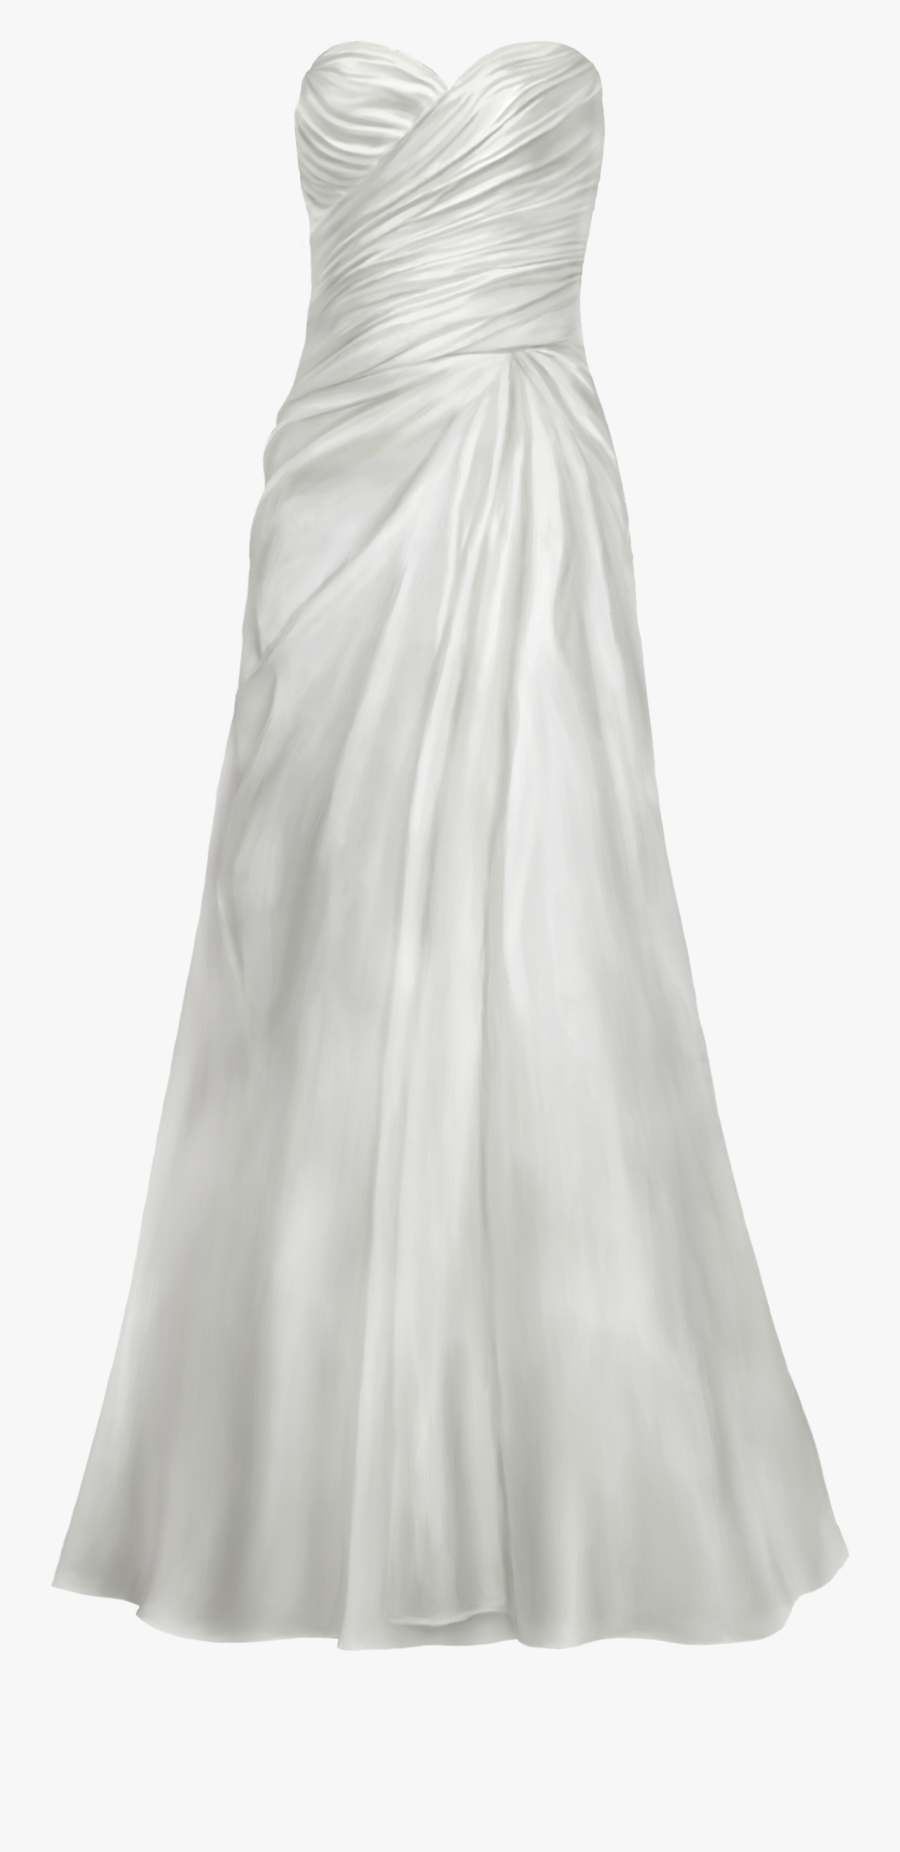 Satin Wedding Dress Png Clip Art - Wedding Dress Transparent Png, Transparent Clipart